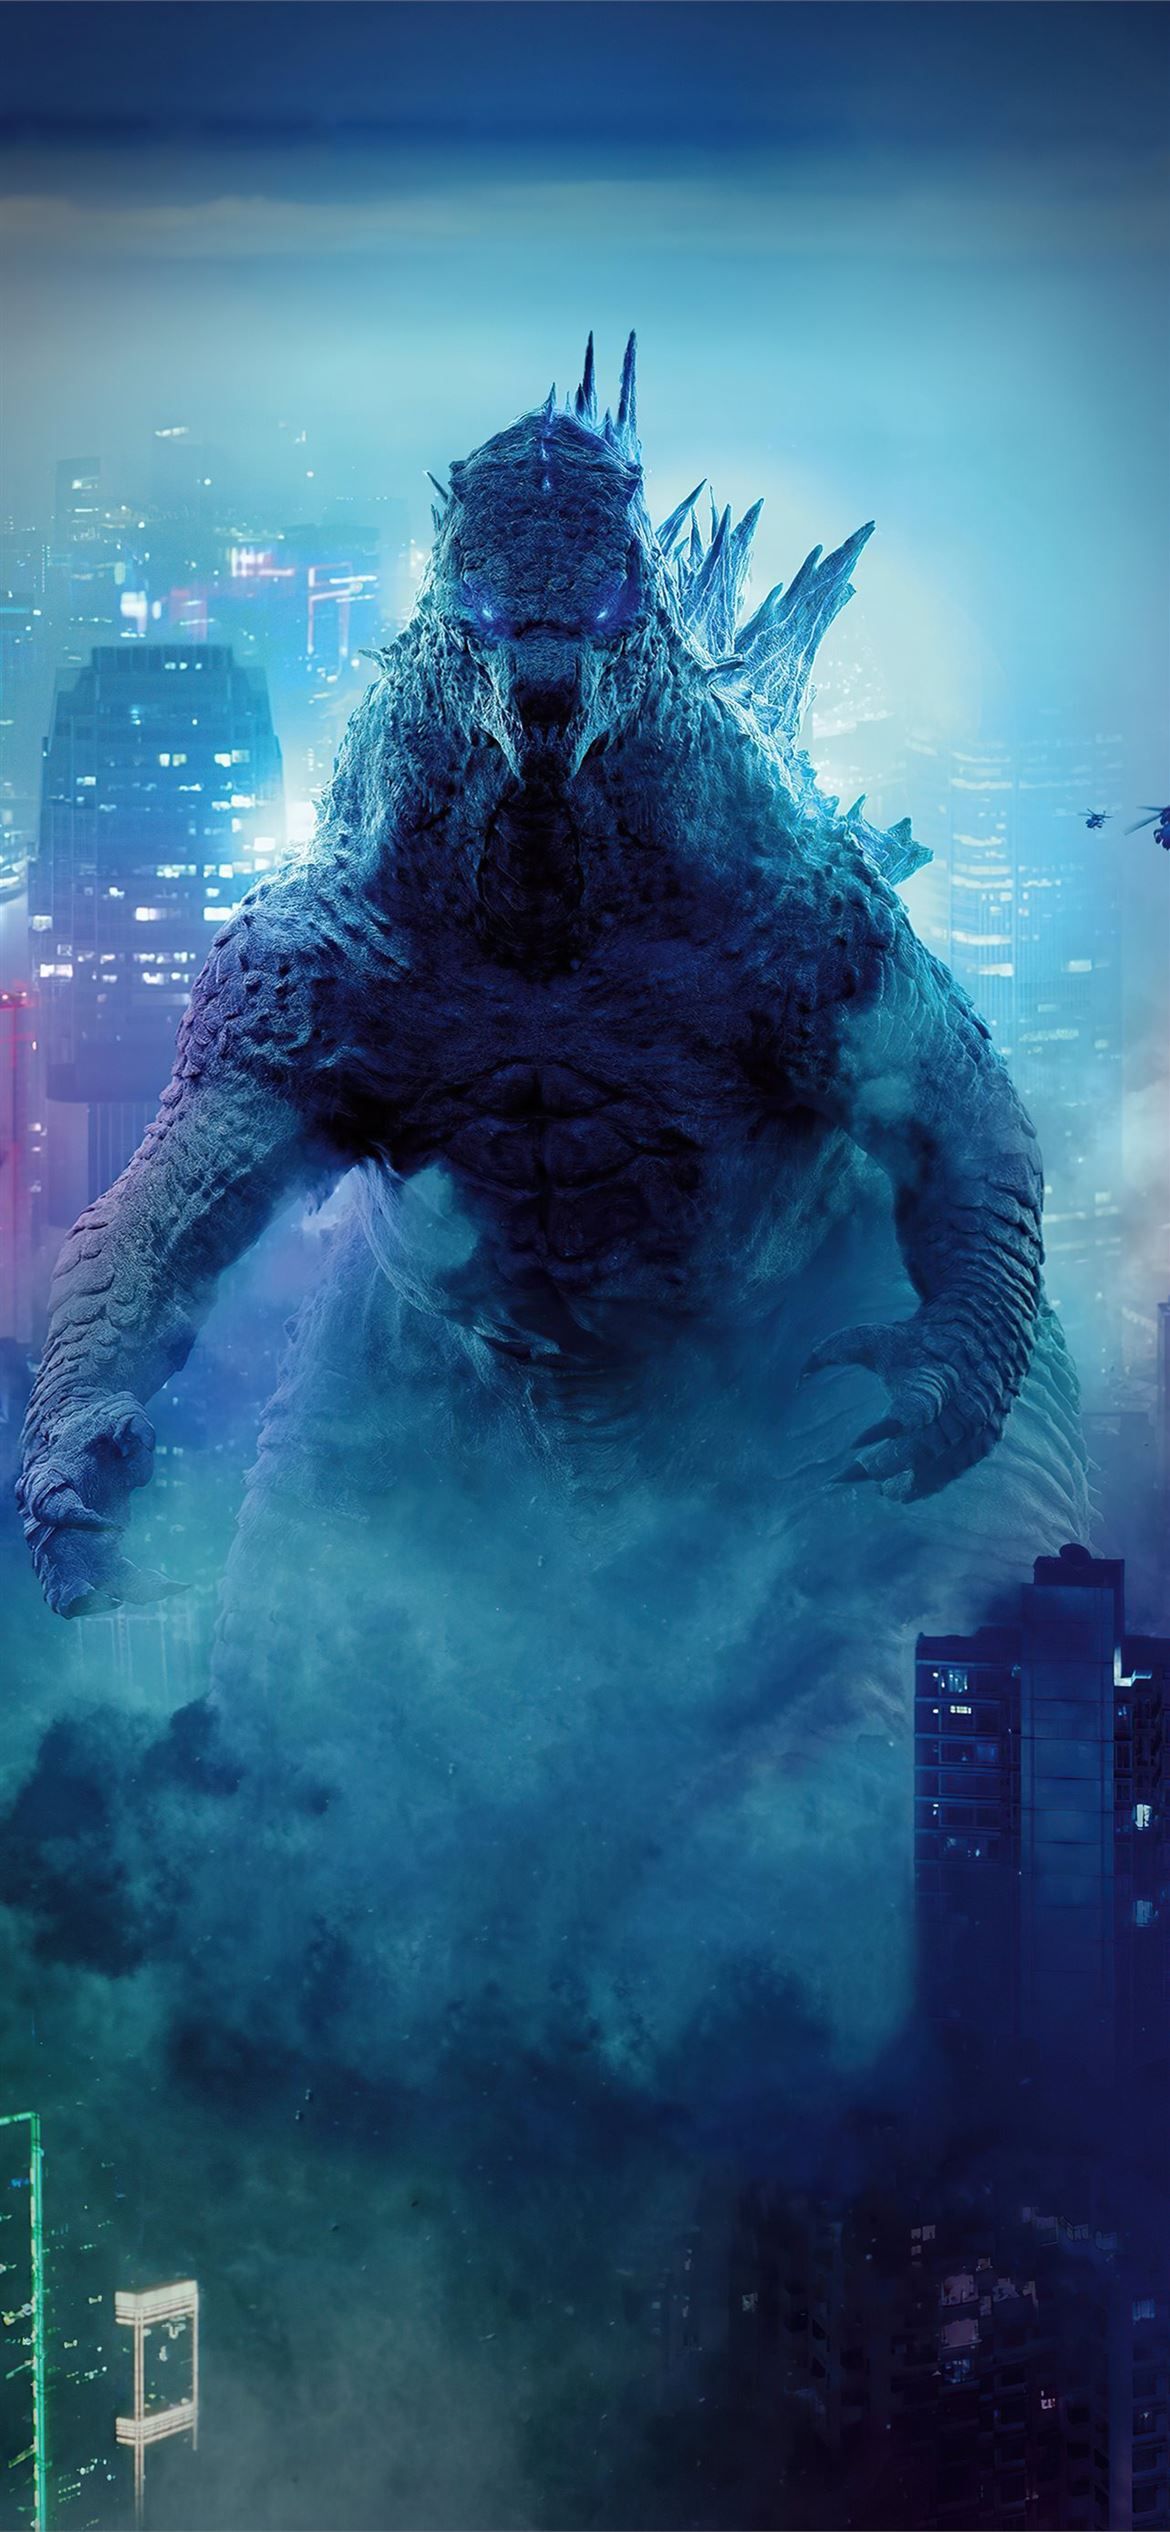 godzilla king of the ocean #GodzillaVsKong #KingKong #movies Movies k k. Godzilla wallpaper, Godzilla, All godzilla monsters